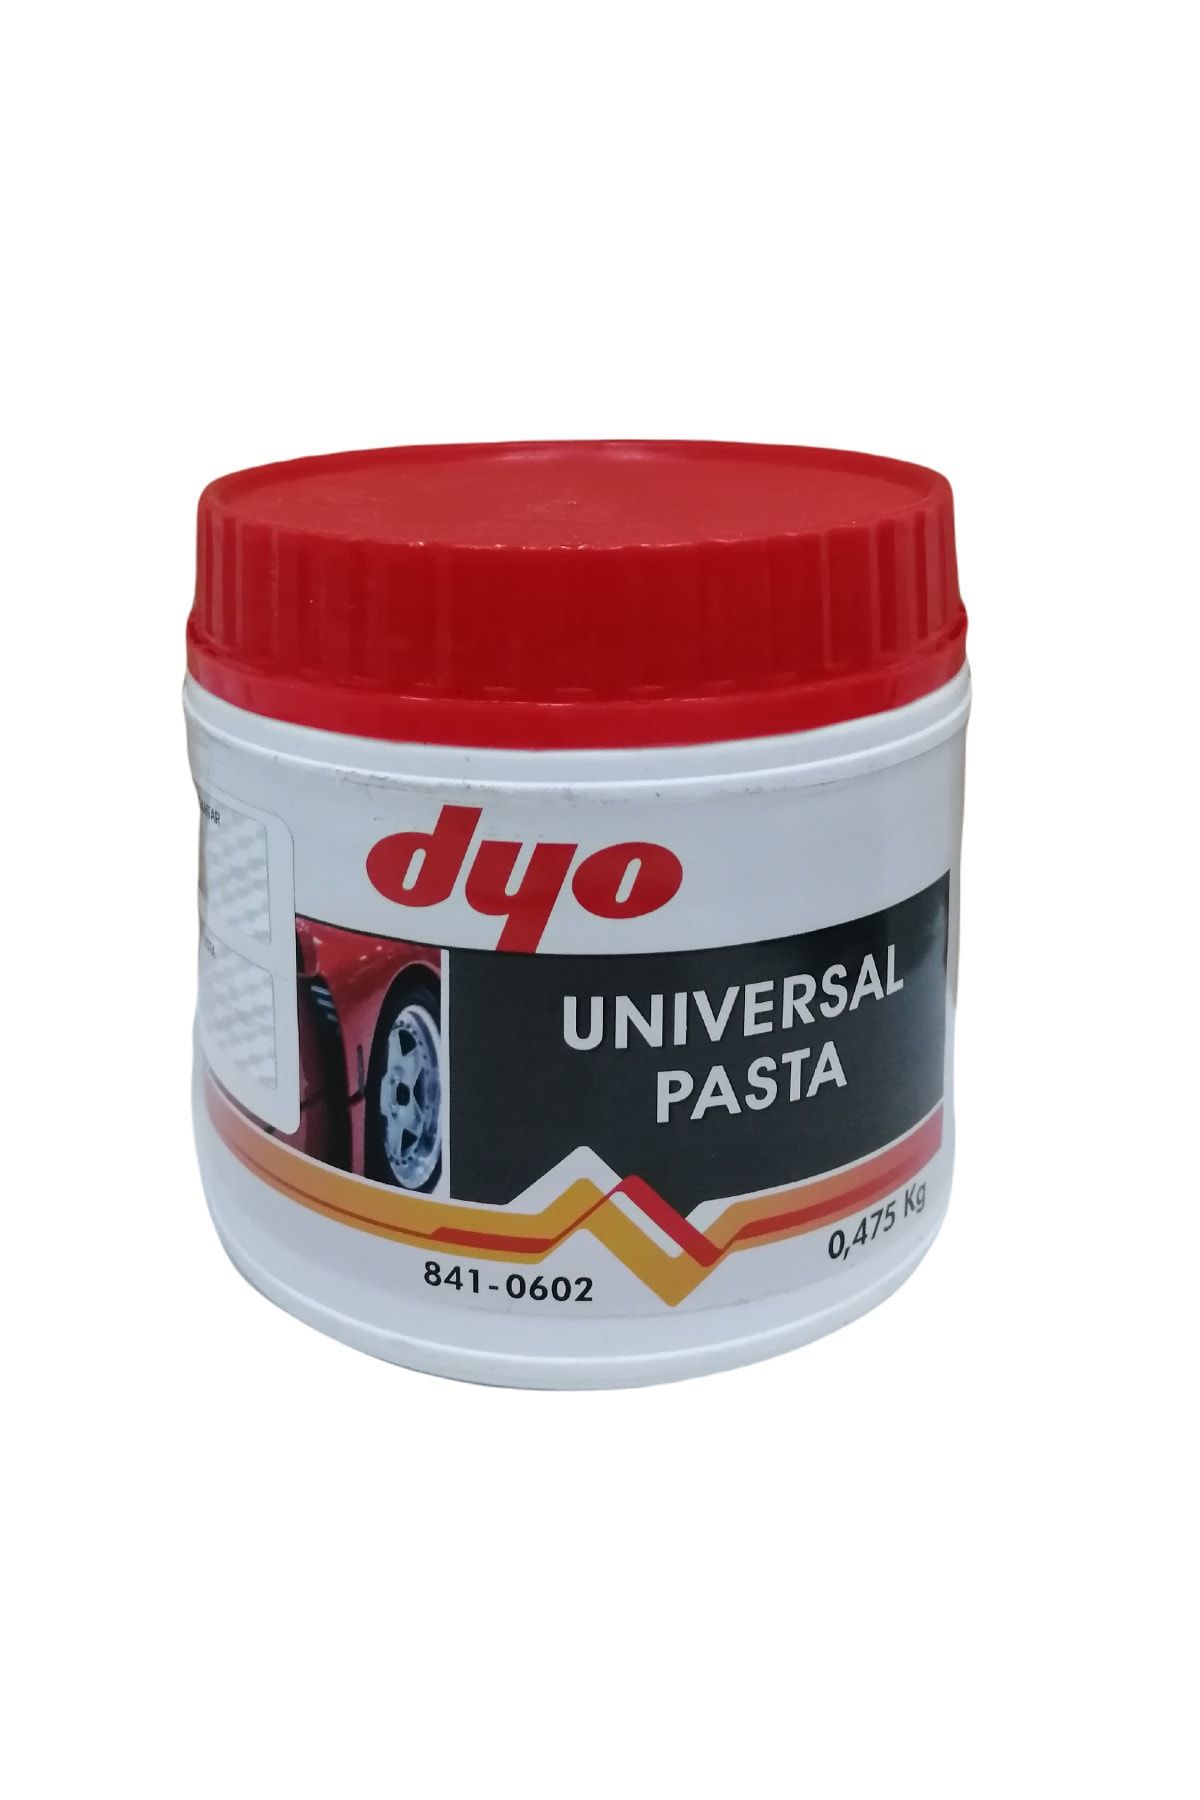 Dyo Universal Pasta / 0,475 kg